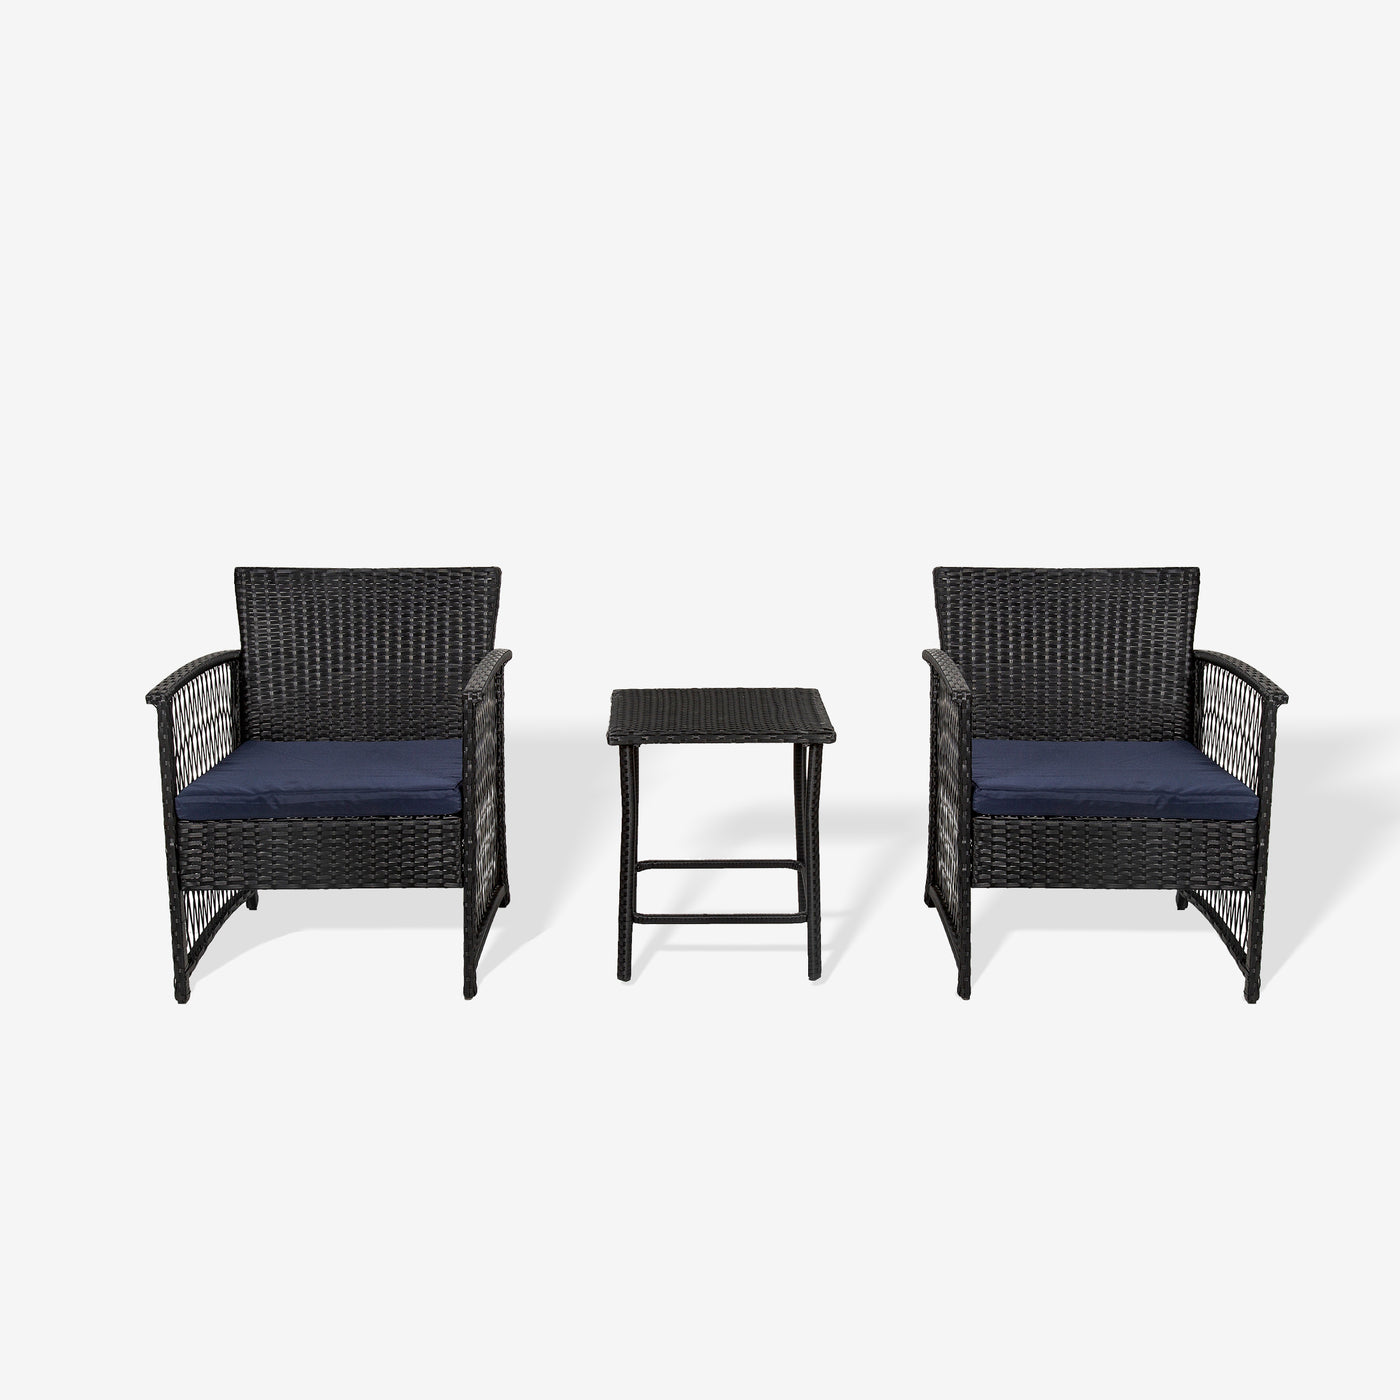 Melvi 3-Piece Outdoor Patio Wicker Conversation Set, Black